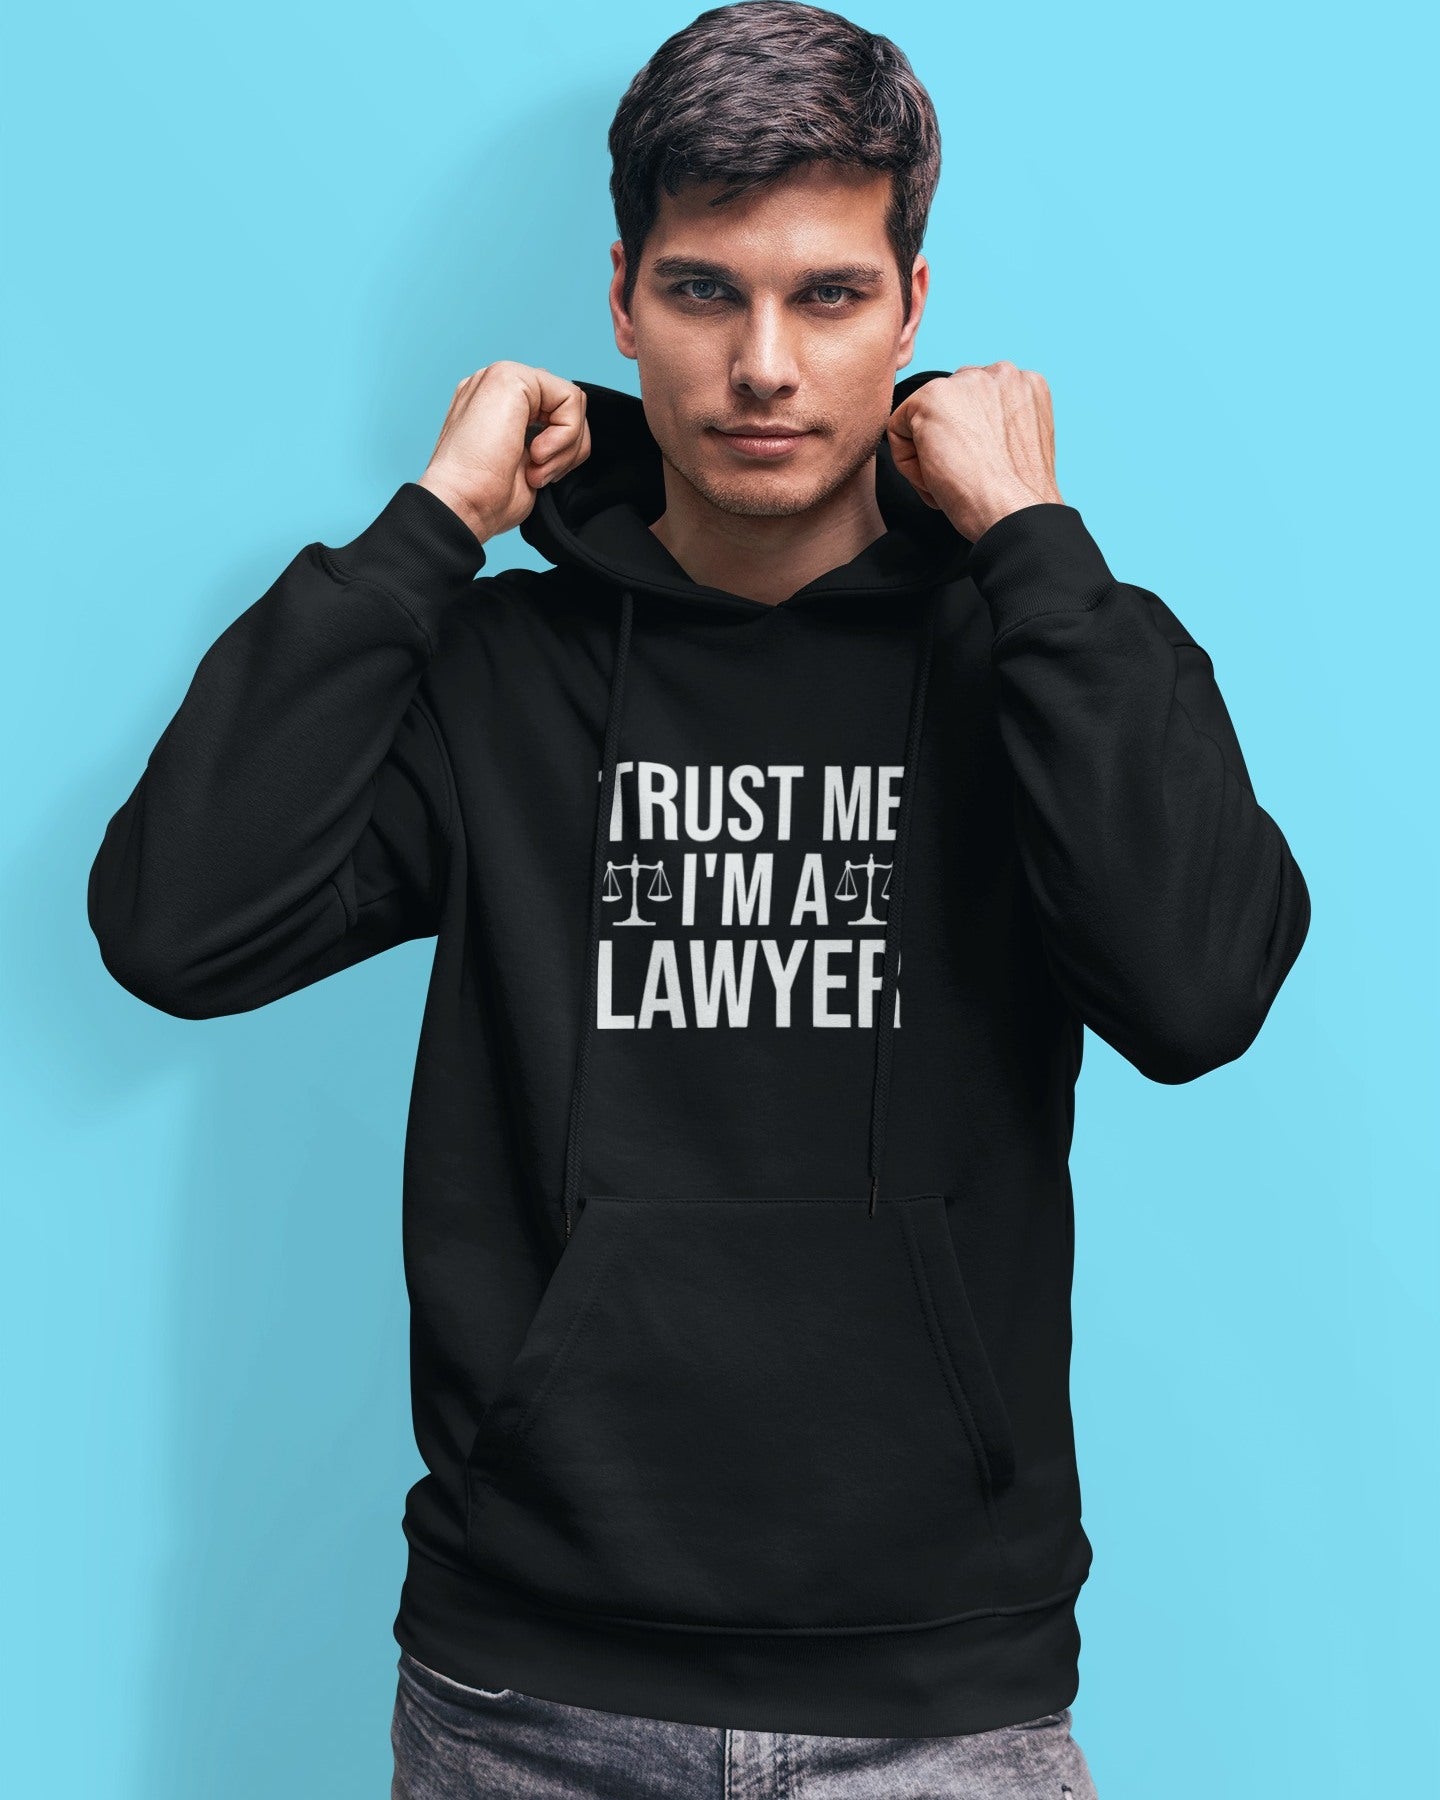 Trust Me I’m A Lawyer! (Hoodie)